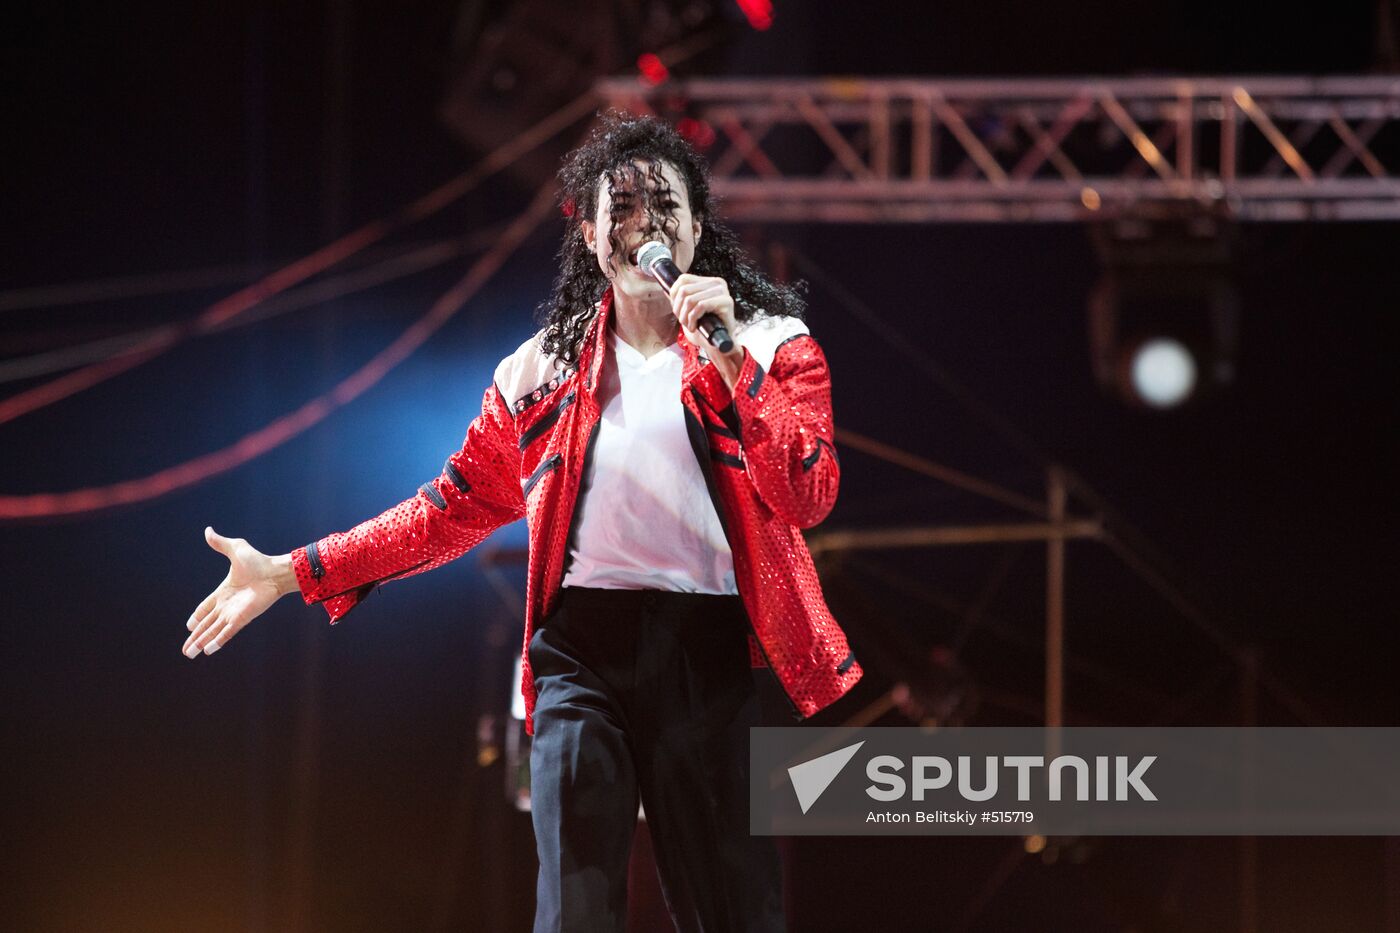 Michael Jackson impersonator Earnest Valentino